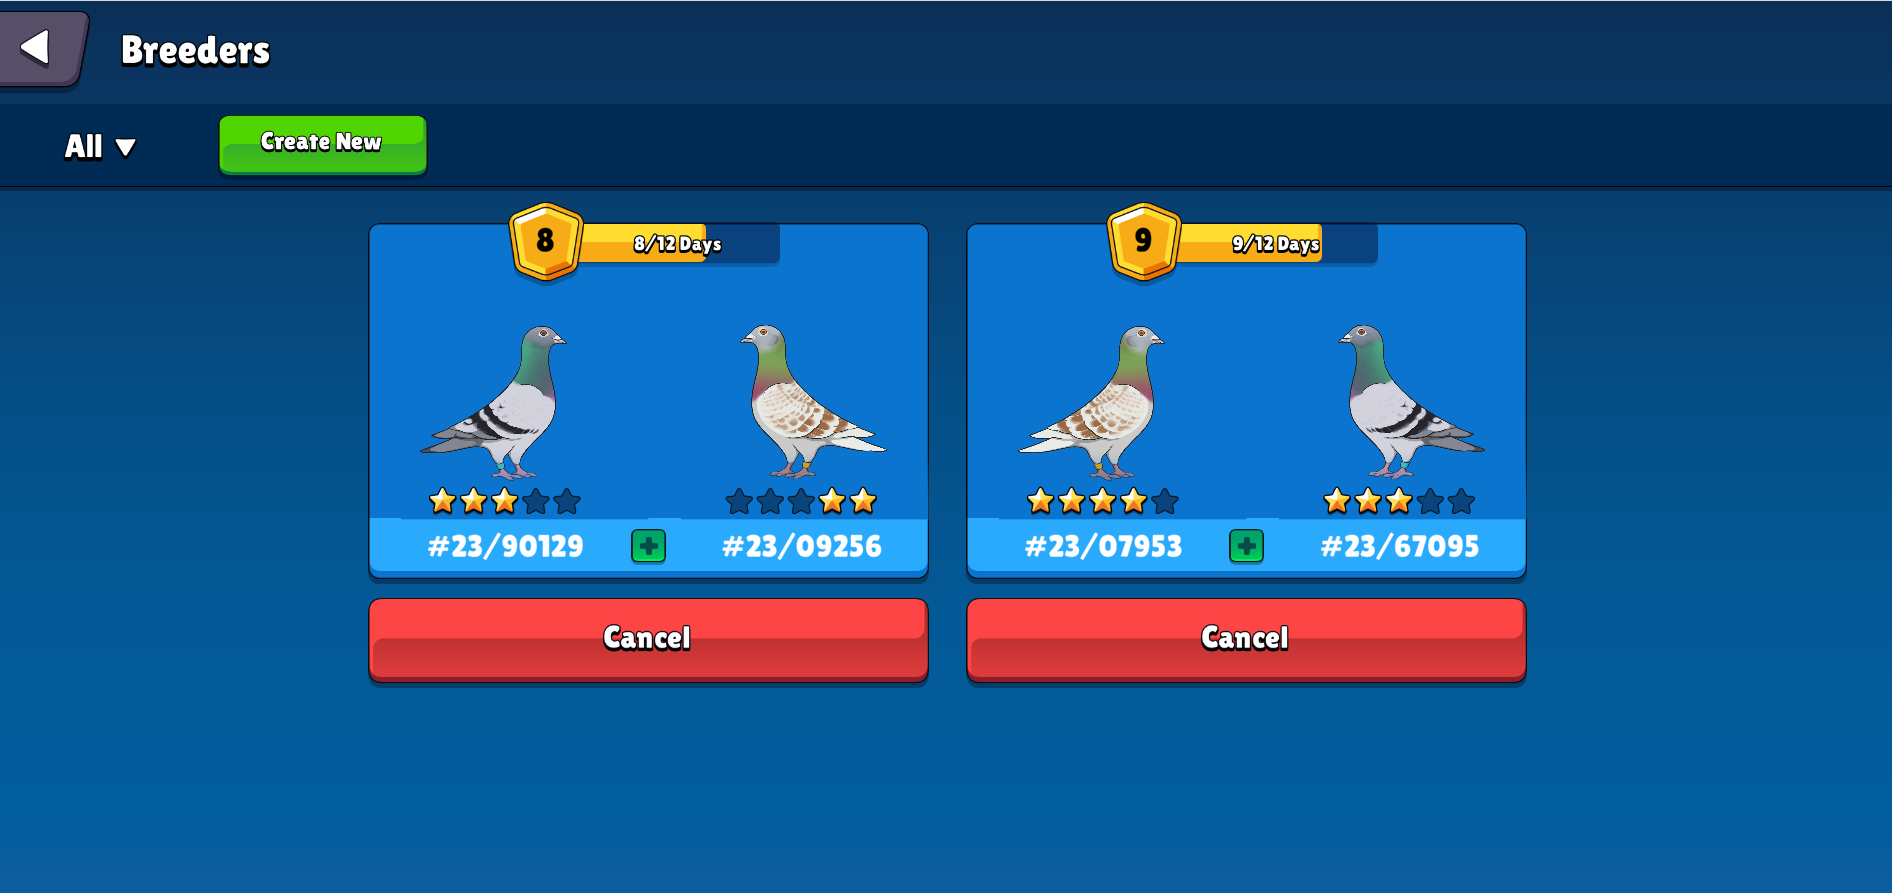 Screenshot of PigeonDash - Pigeon Racing